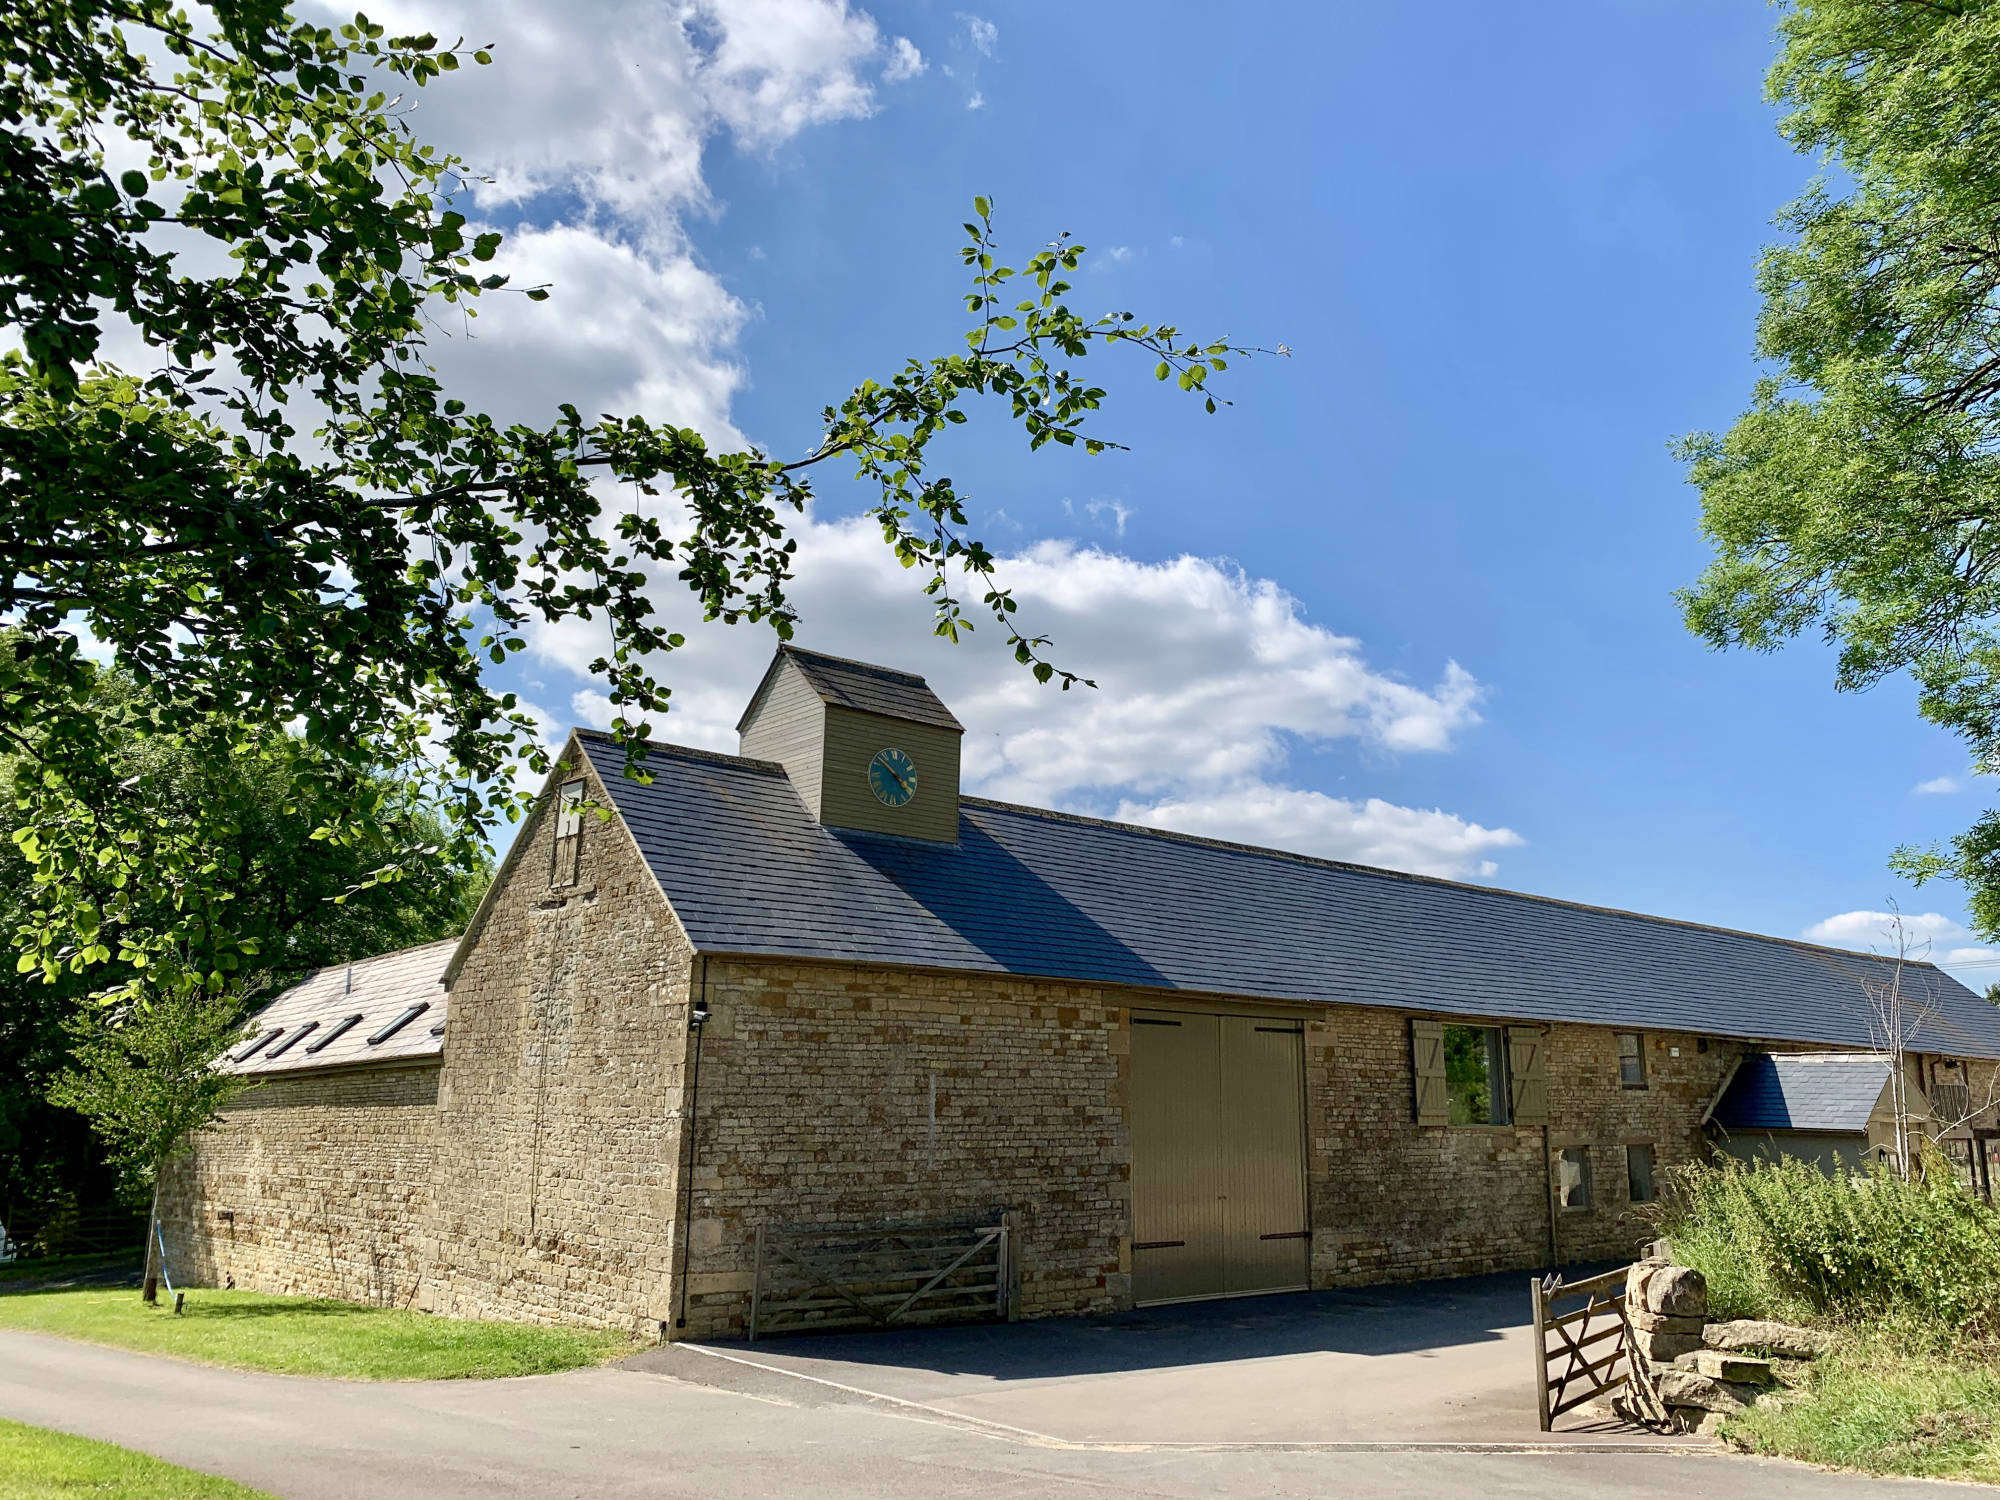 The Barn @ GRH Farm, Great Rissington, Gloucestershire, UK